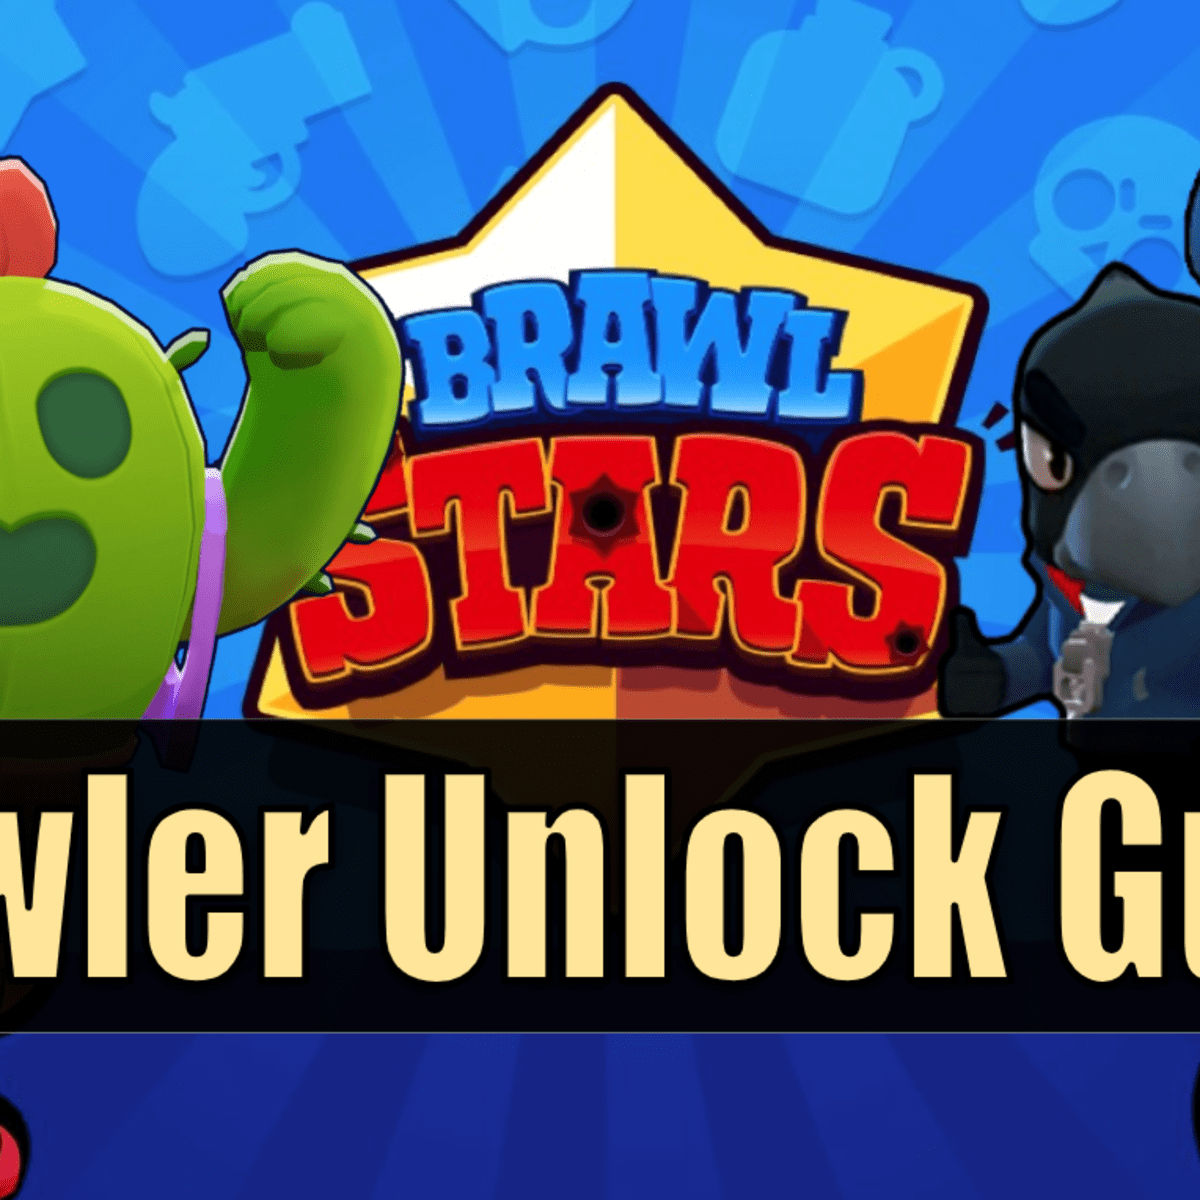 Brawl Stars Brawler Unlock Guide Levelskip - brawl stars how to unlock all characters